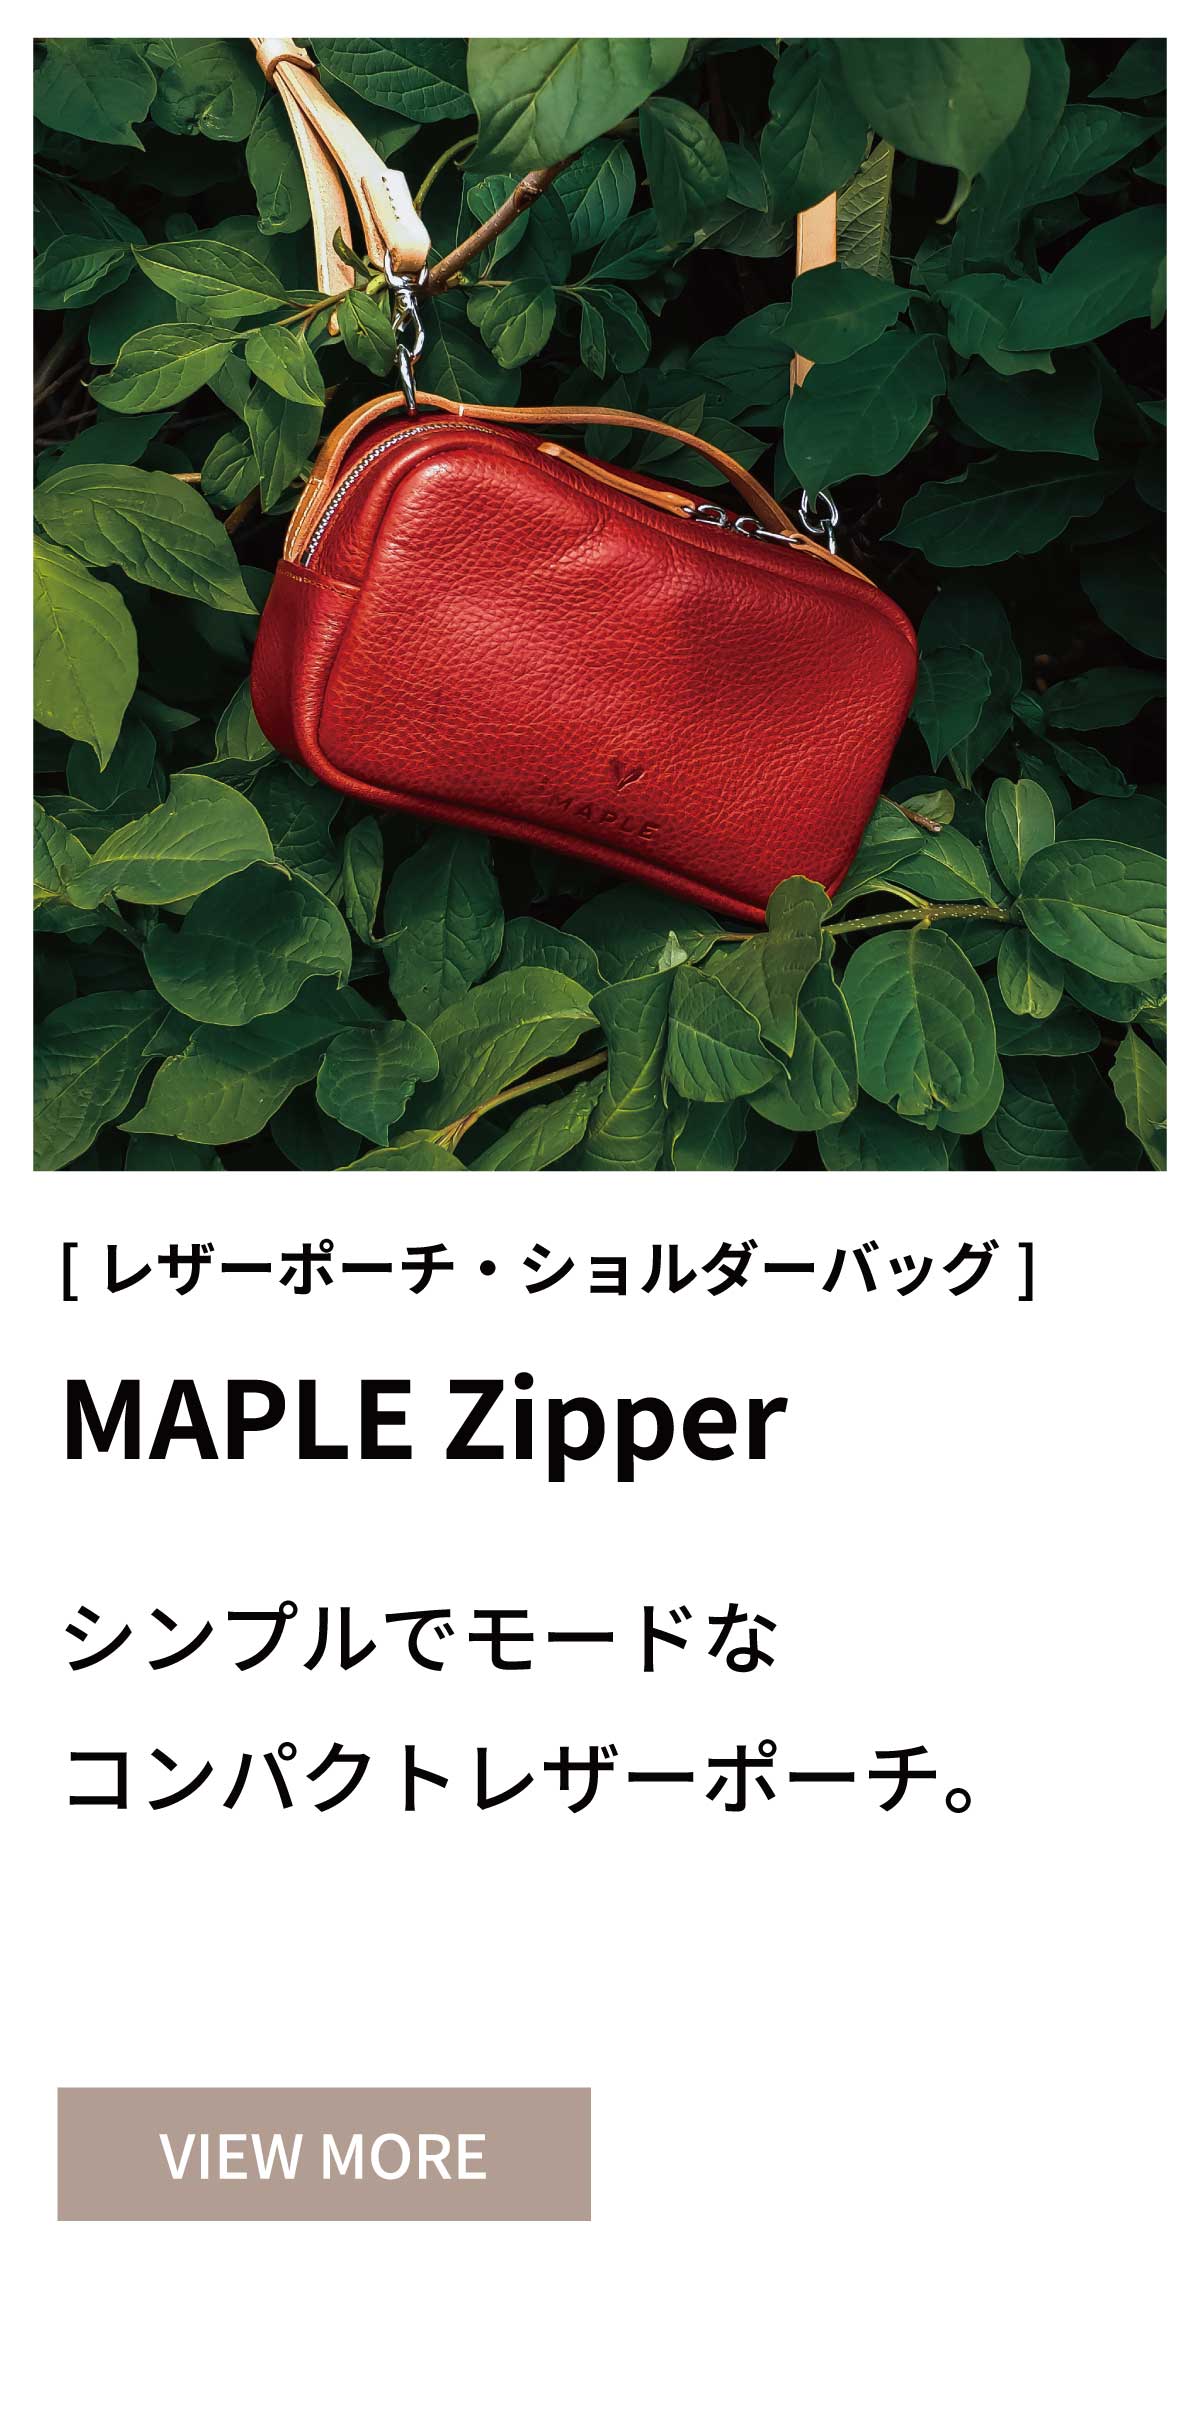 MAPLE Zipper